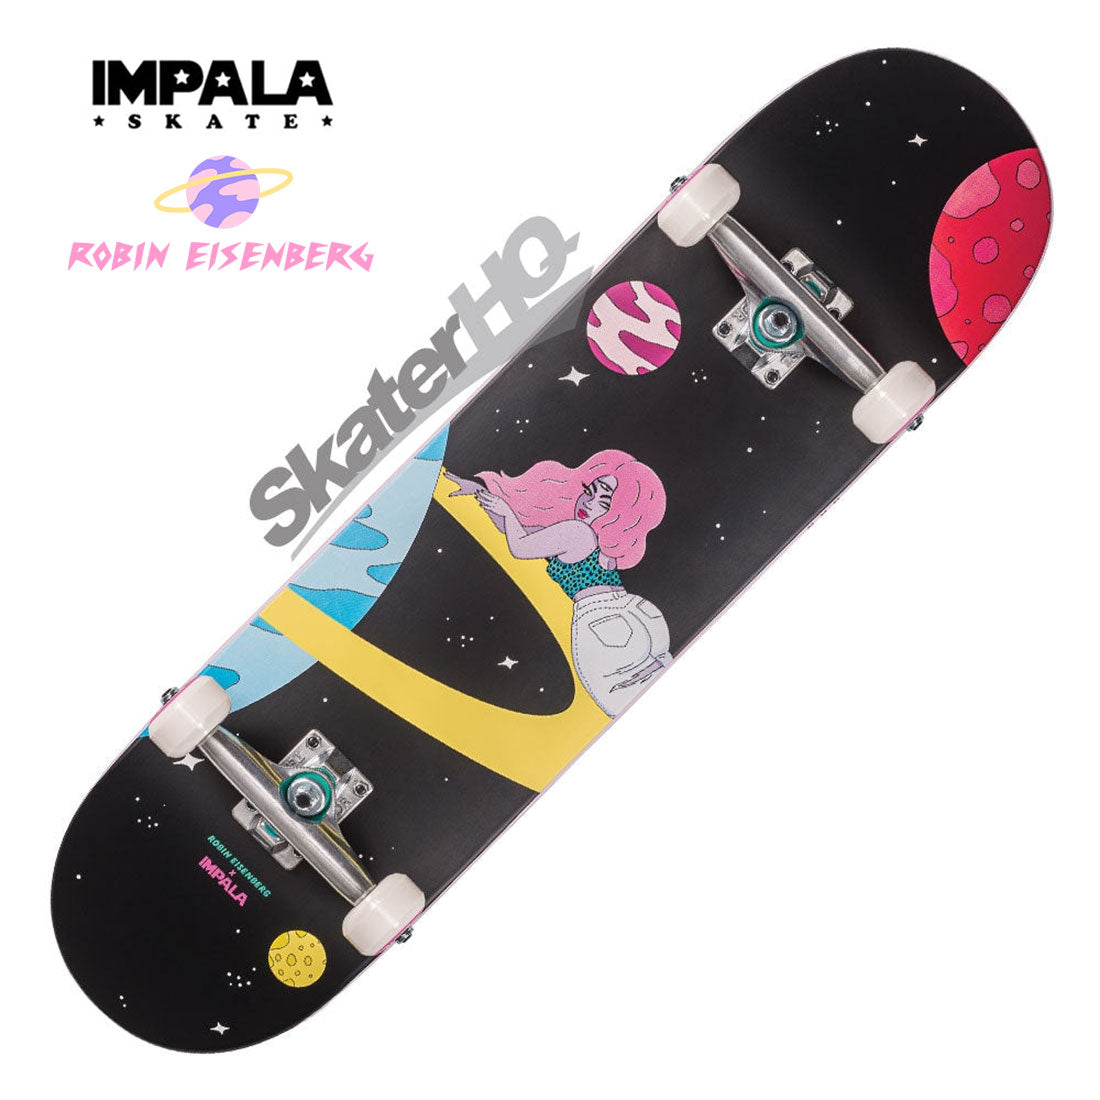 Impala Saturn Robin Eisenberg Space 8.25 Complete Skateboard Completes Modern Street